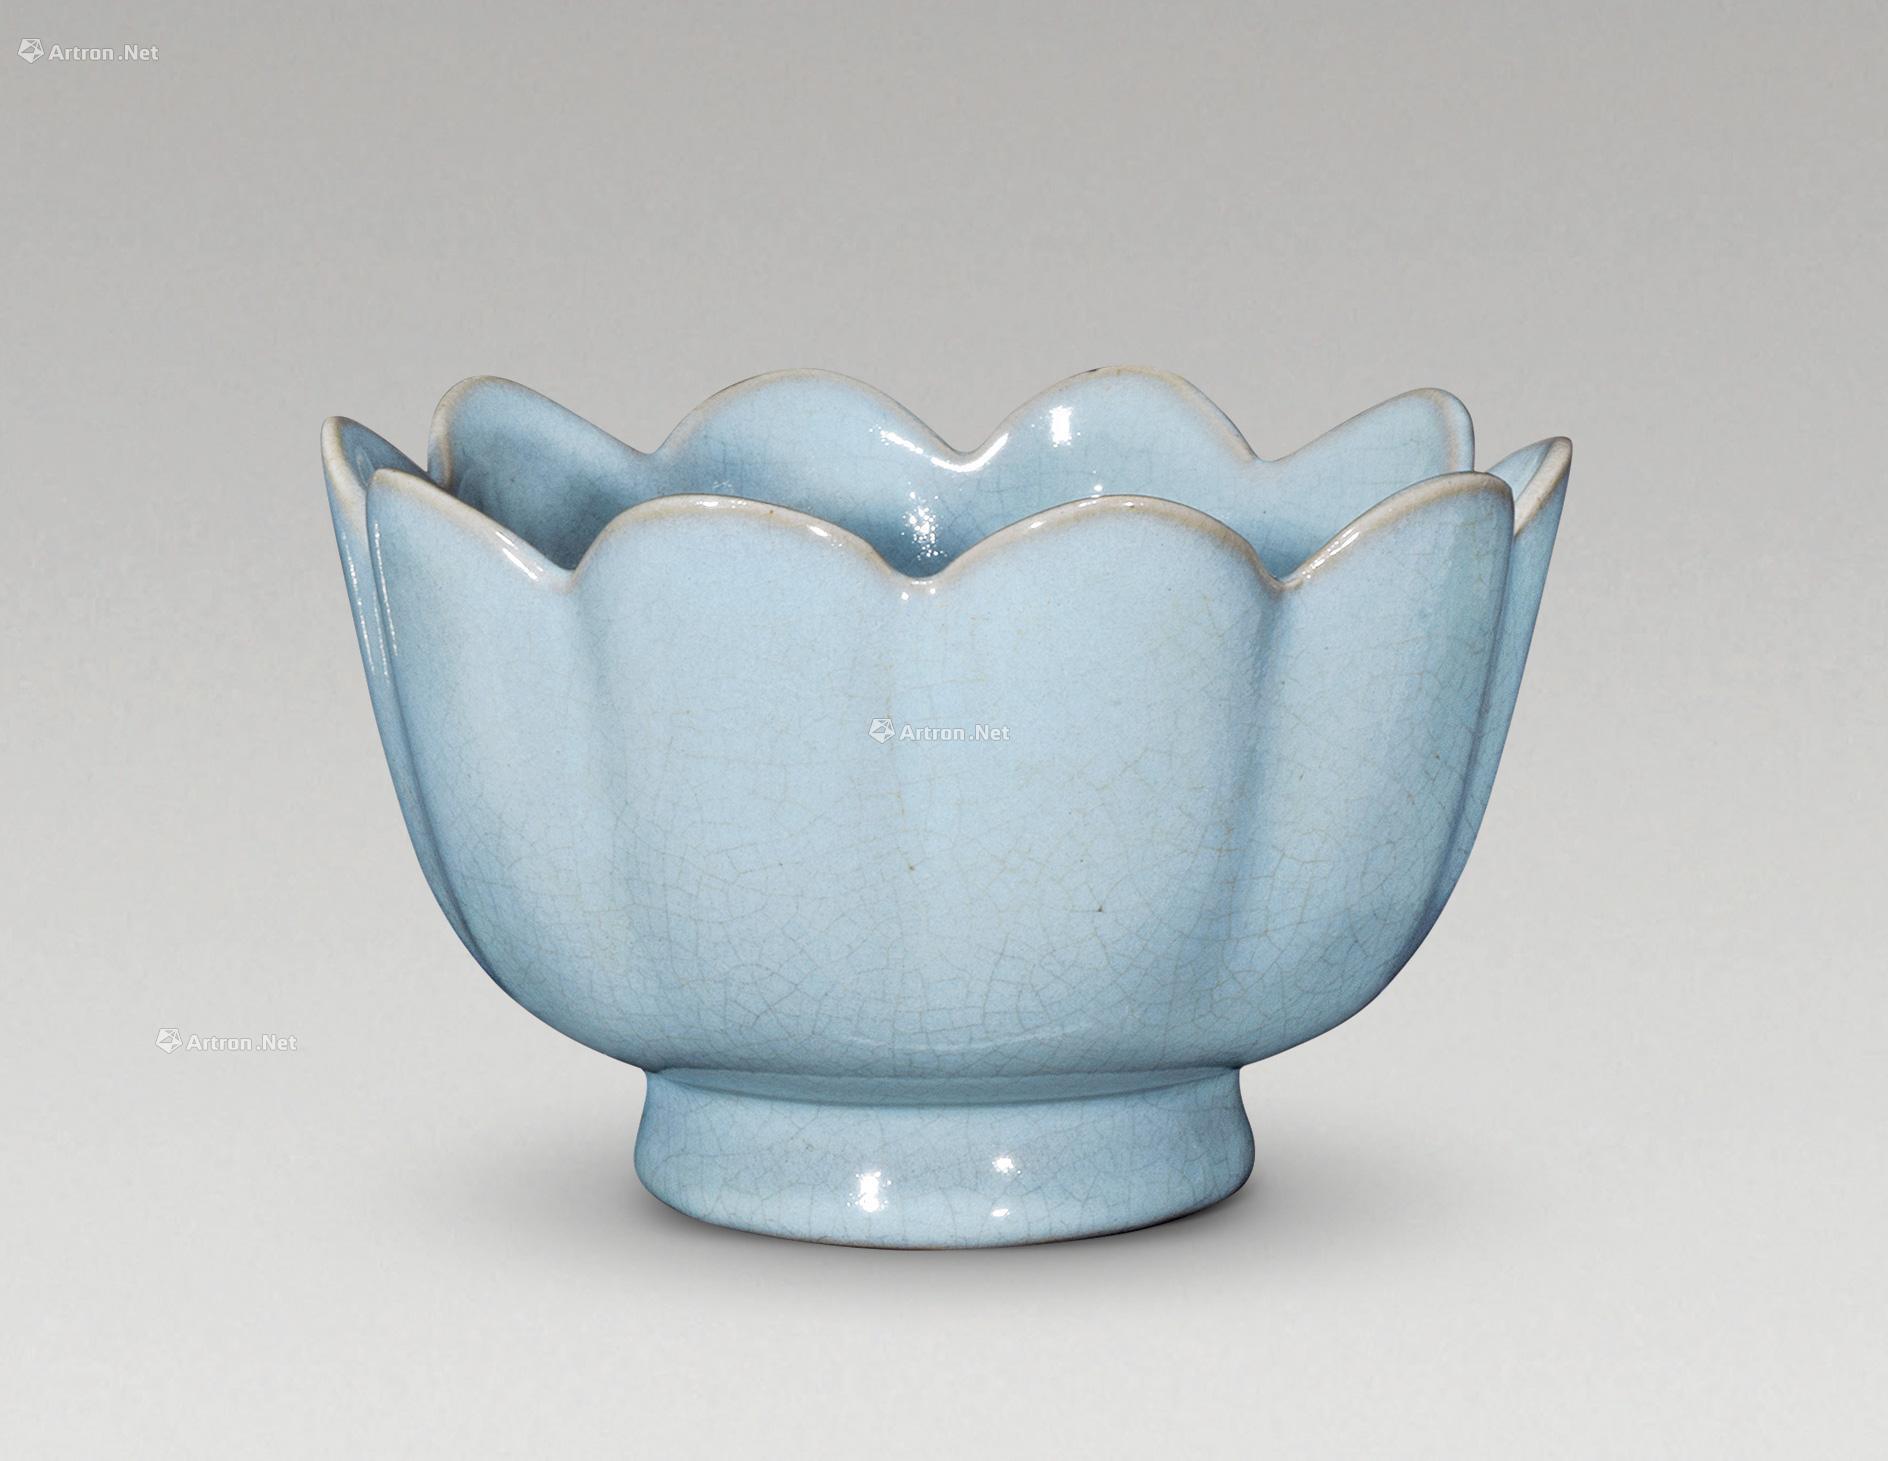 Arta - Ceramic Bowls 这款极具美感的陶瓷碗有打动你吗 - 普象网